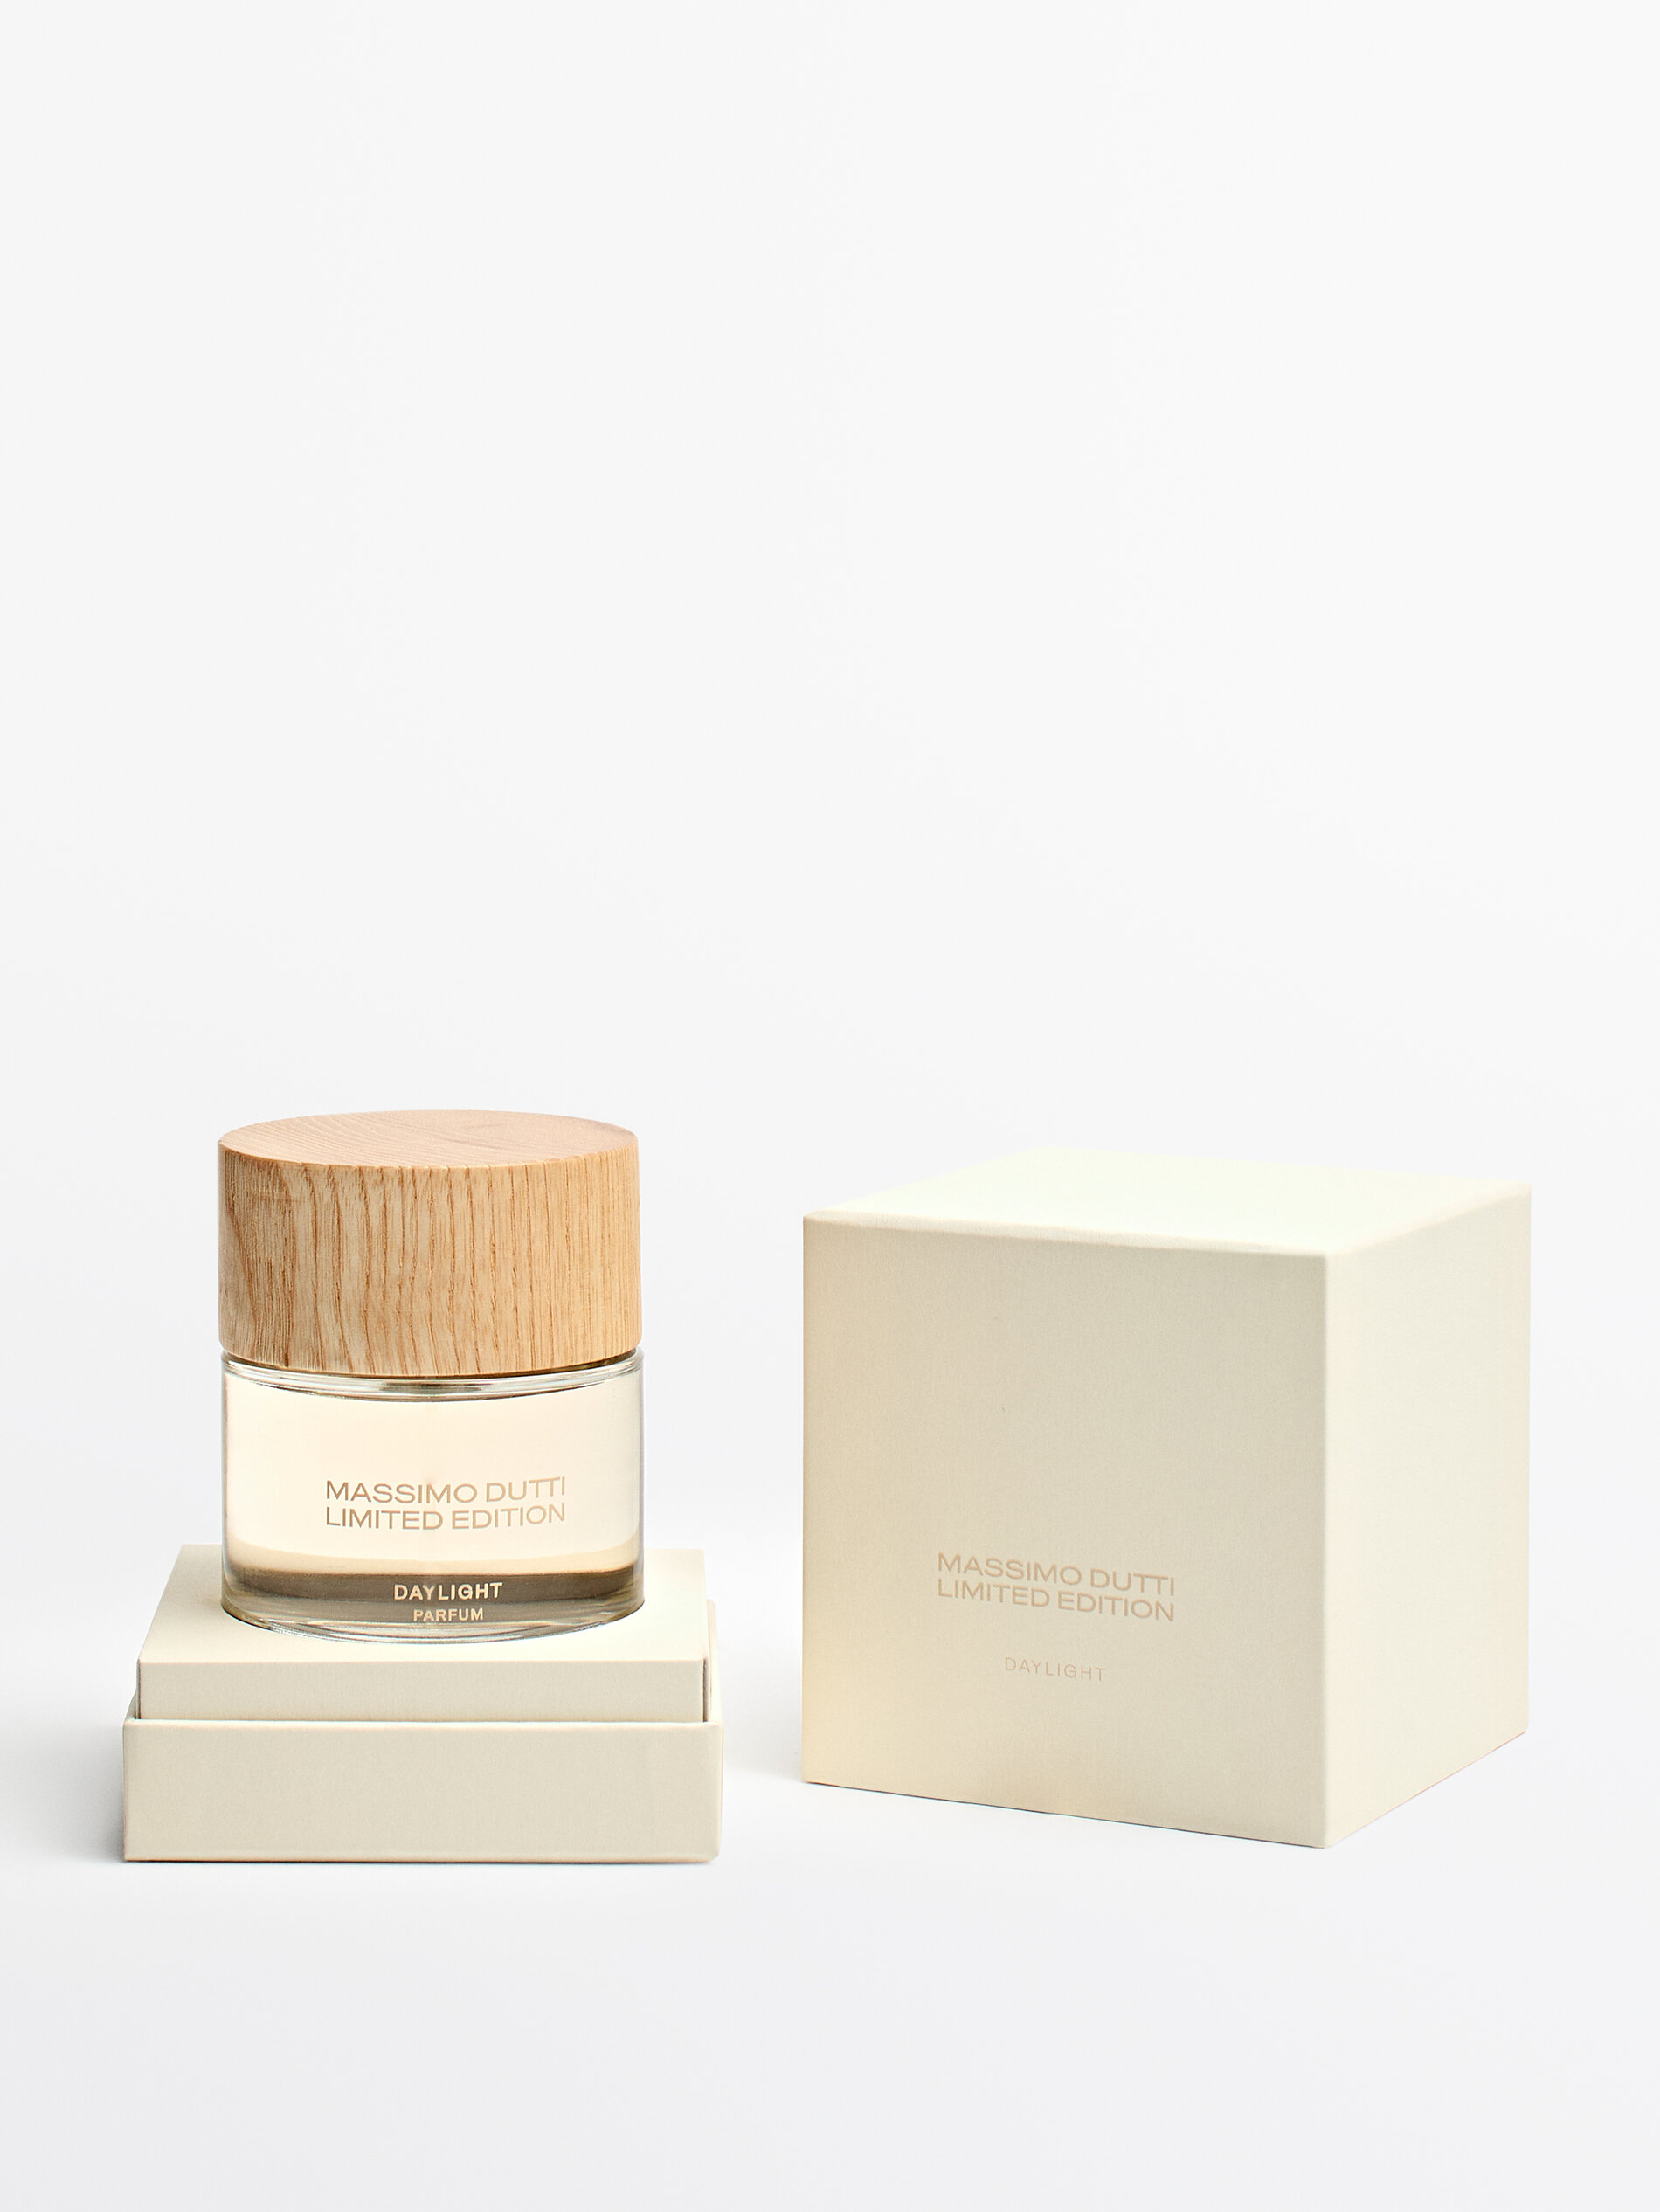 (100ml) Daylight Limited Edition Parfum